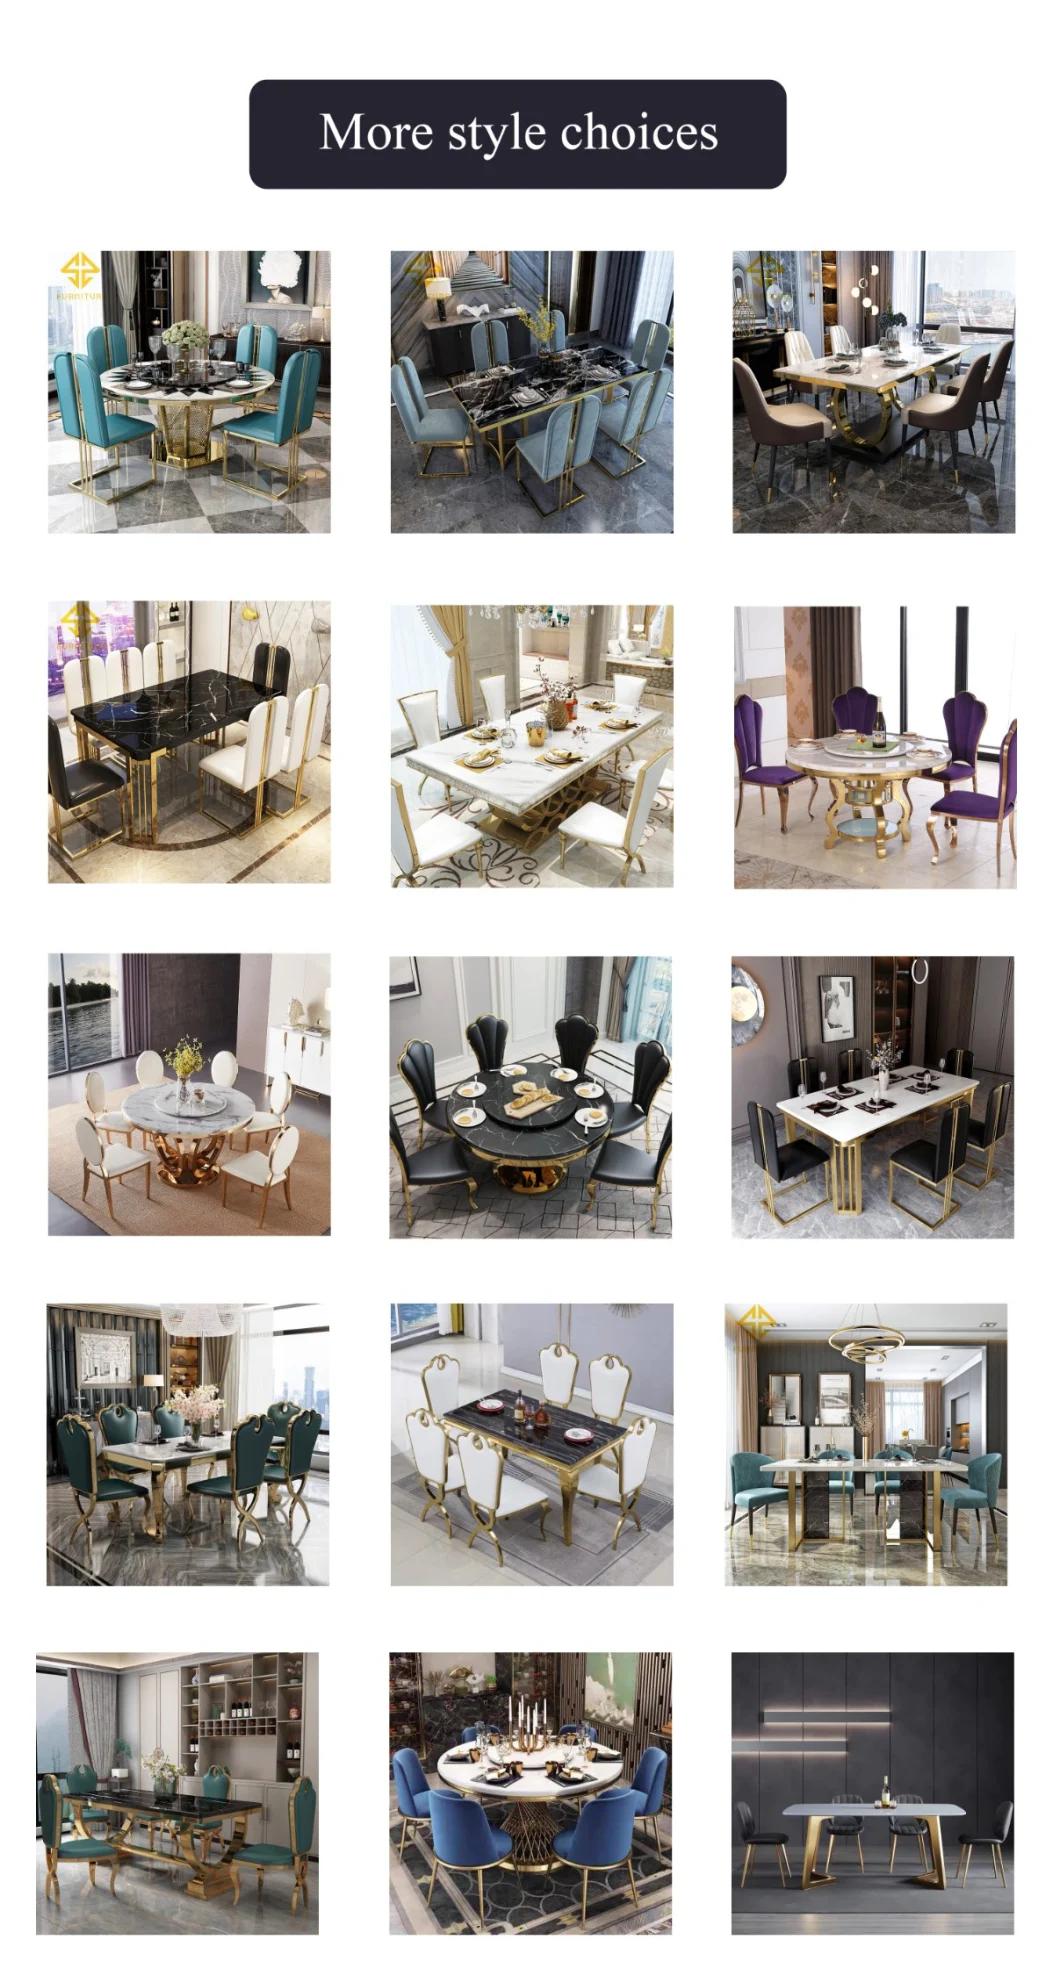 Foshan Luxury Slate Rectangular Rock Dining Table